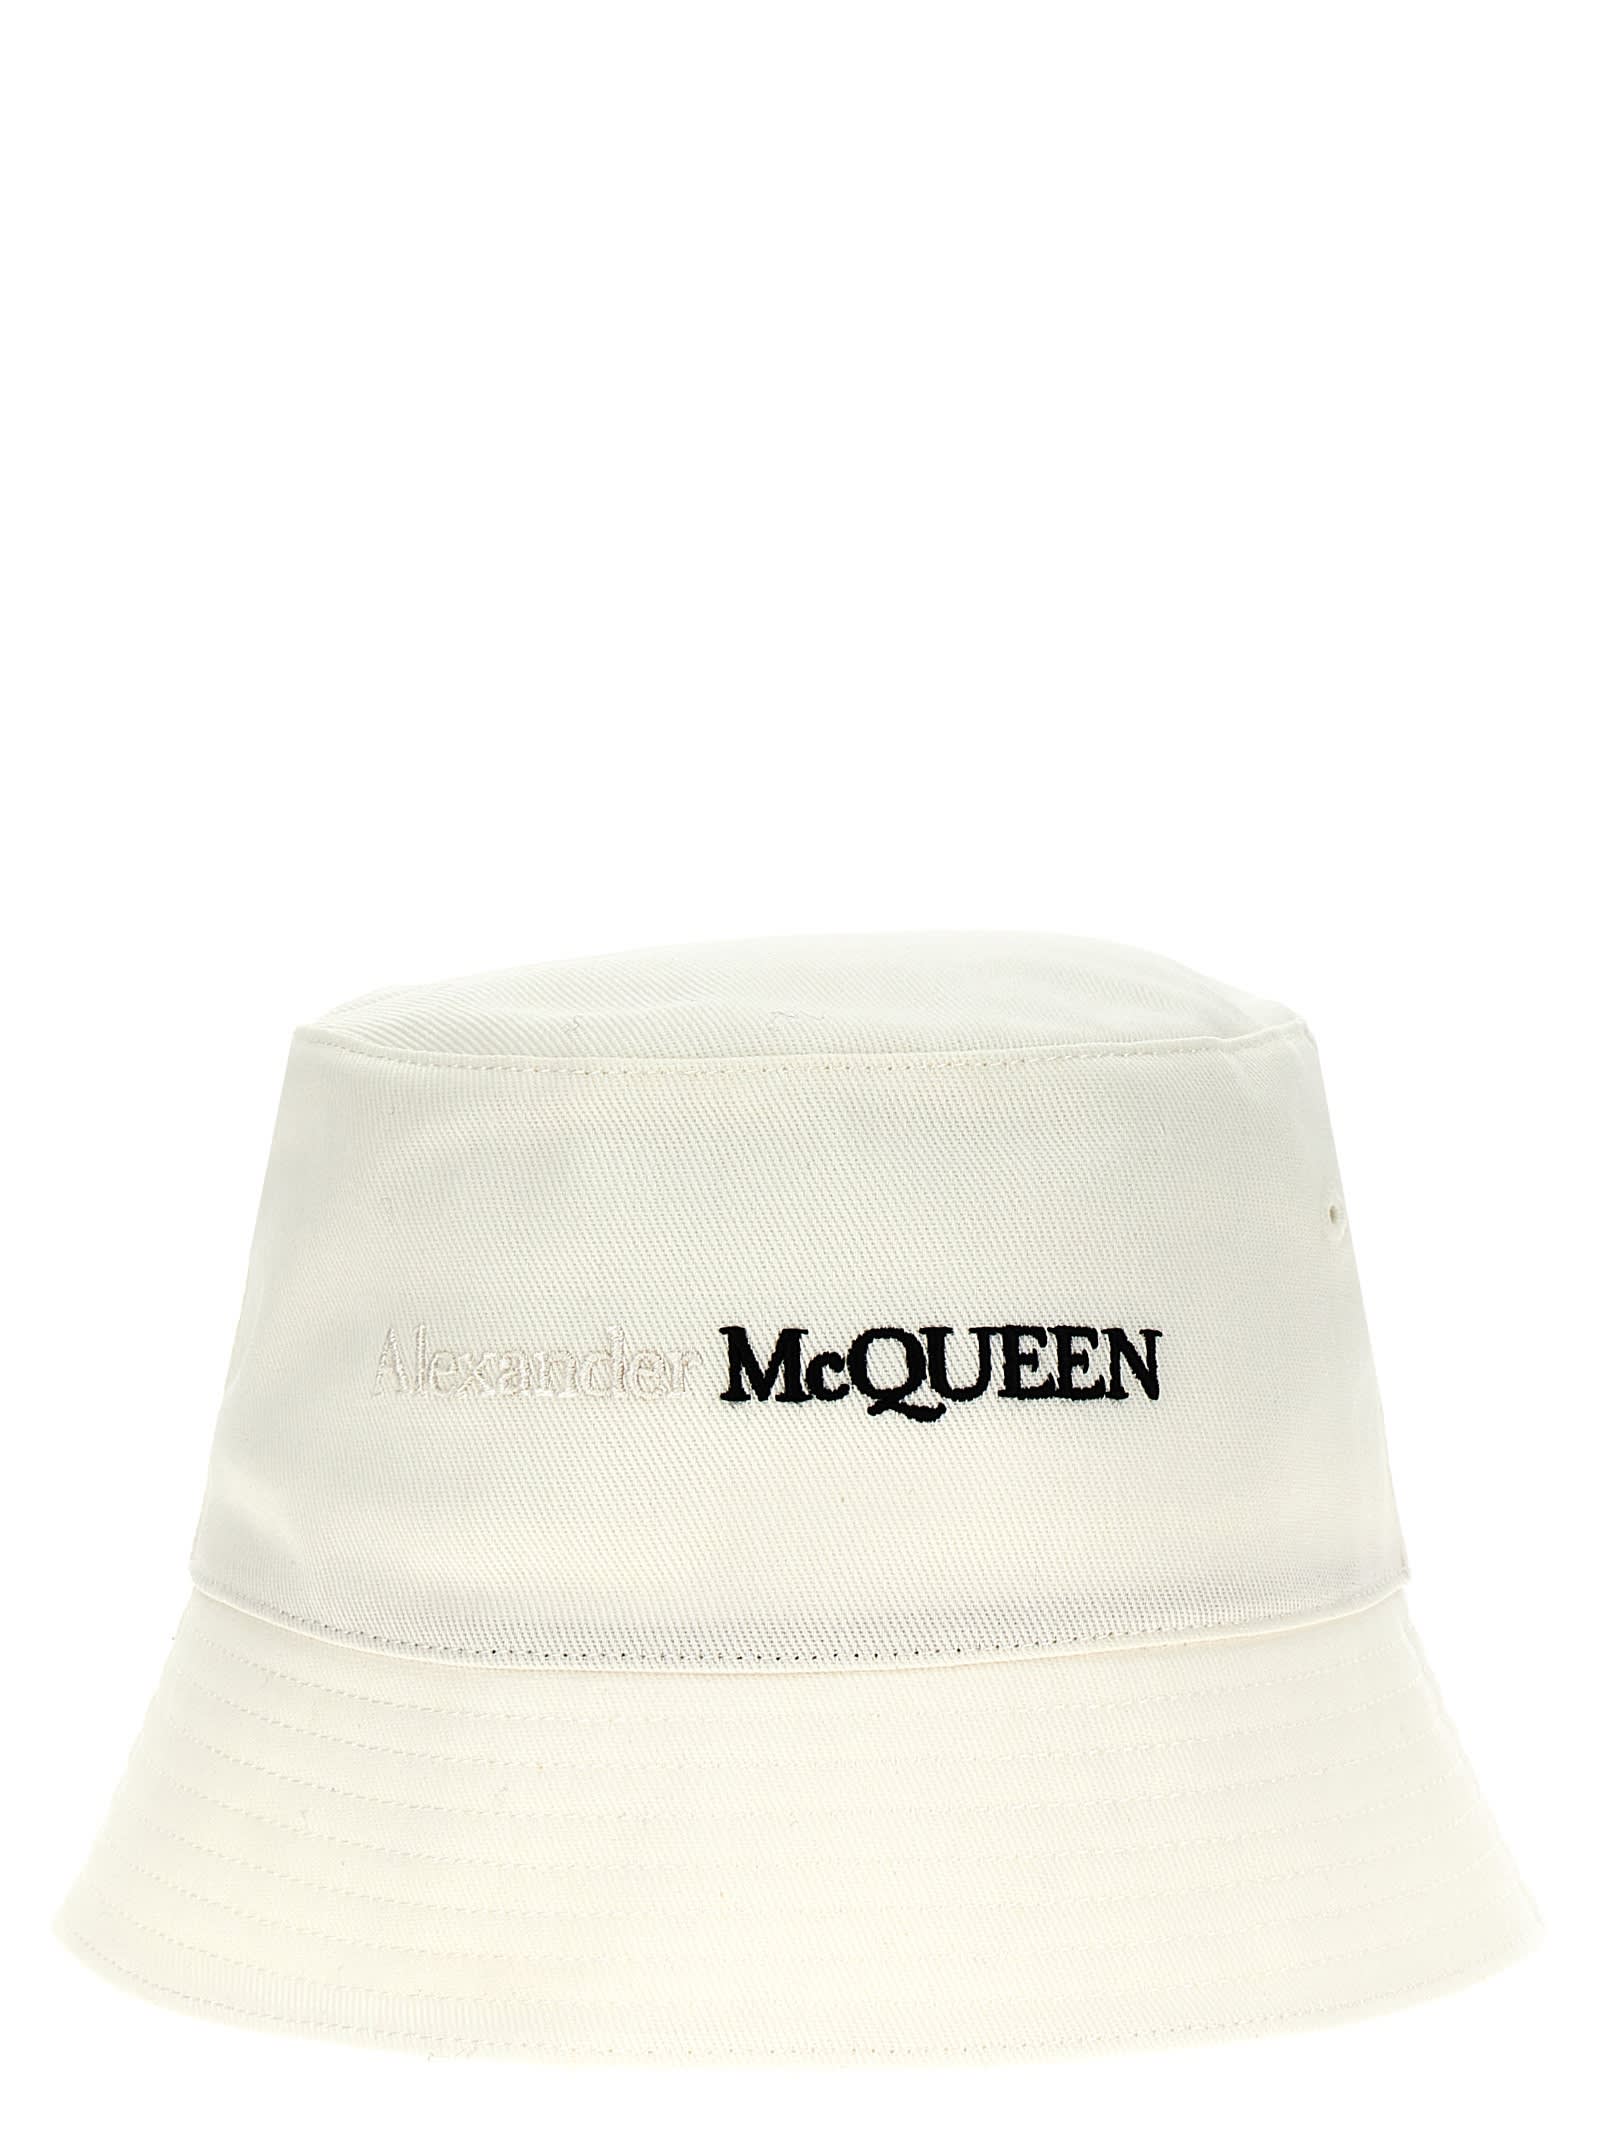 Alexander Mcqueen Logo Bucket Hat In White/black